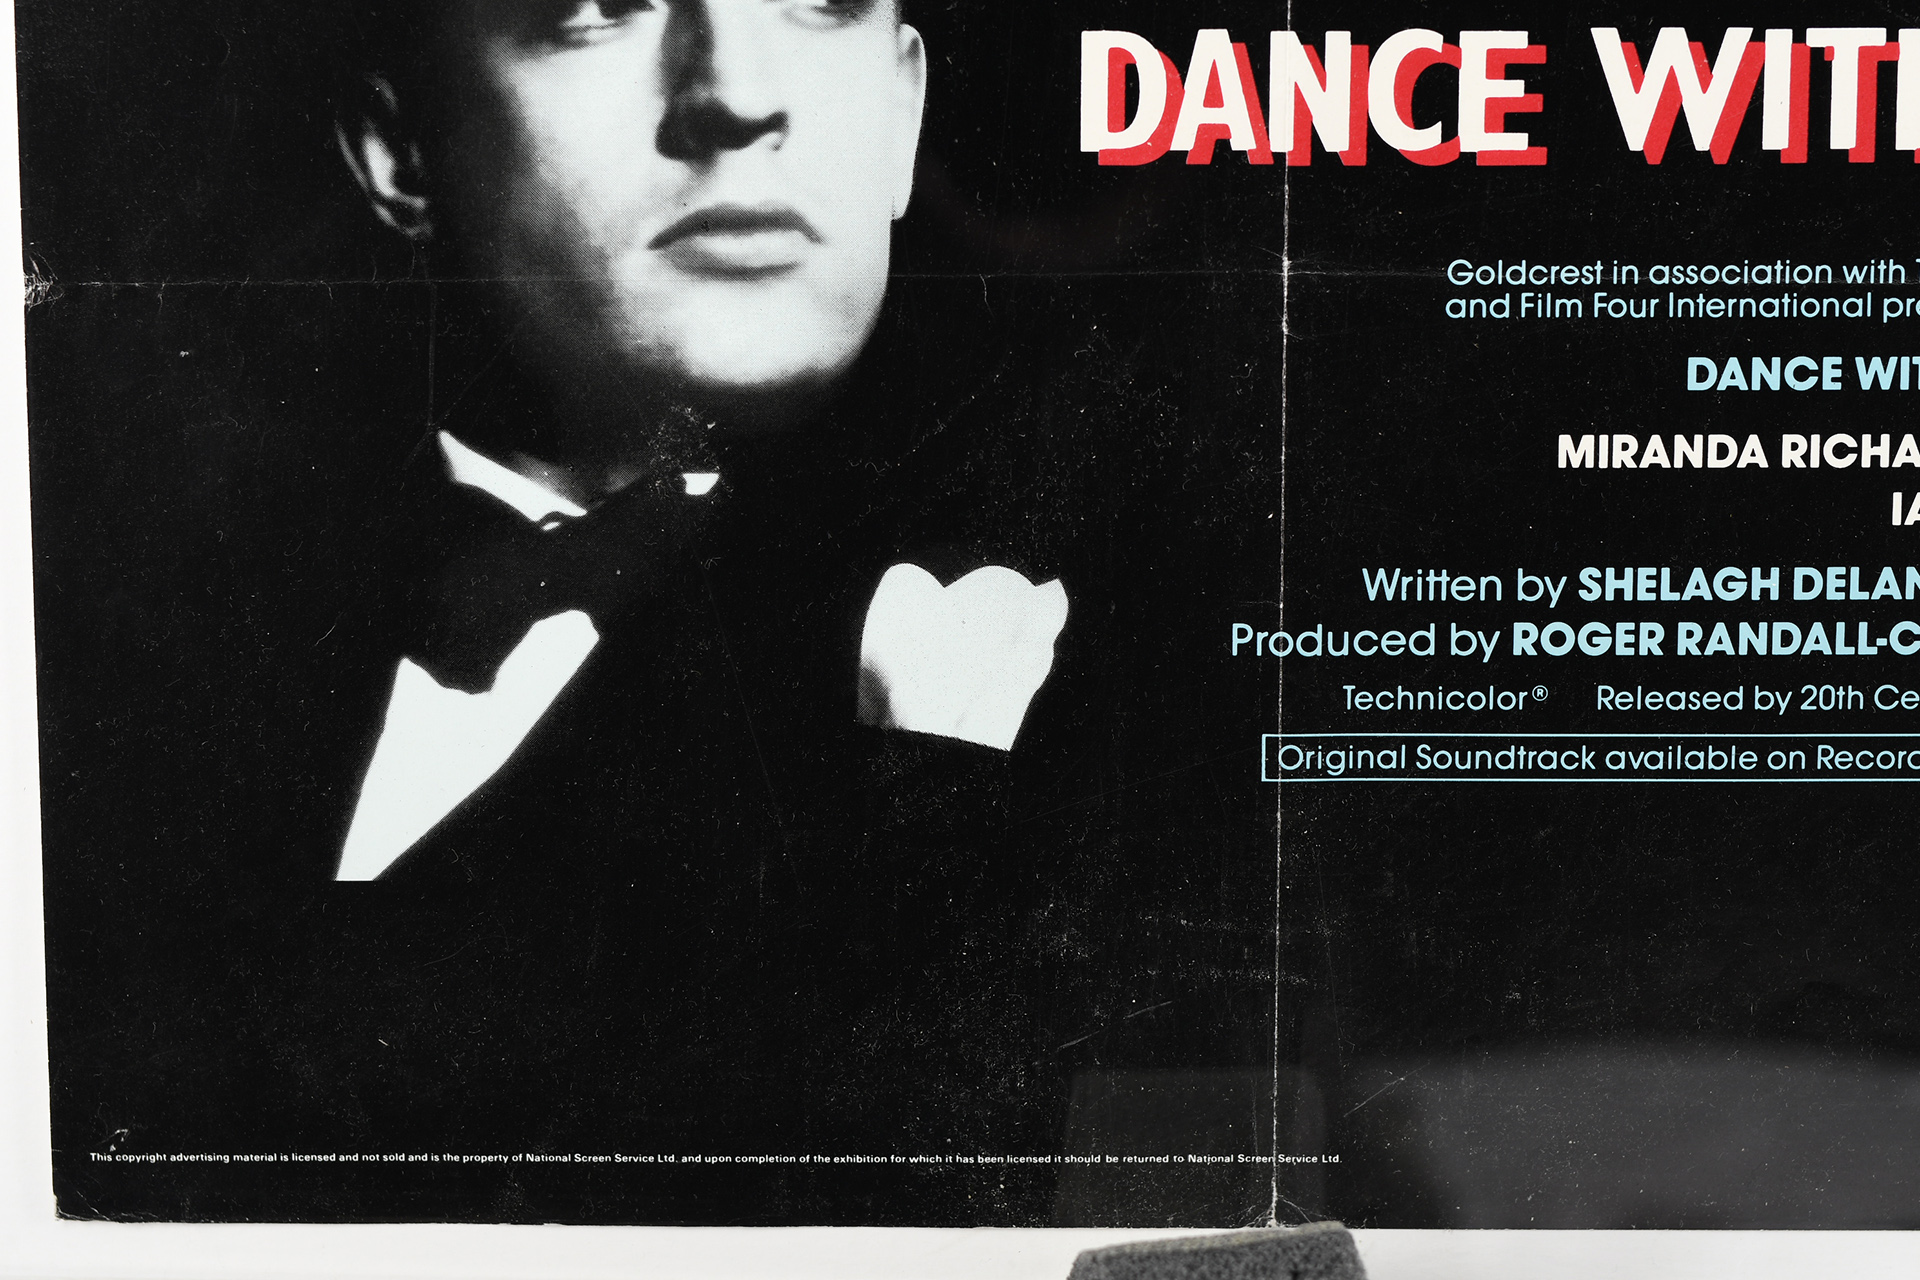 Original "Dance with a Stranger" Cinema Poster